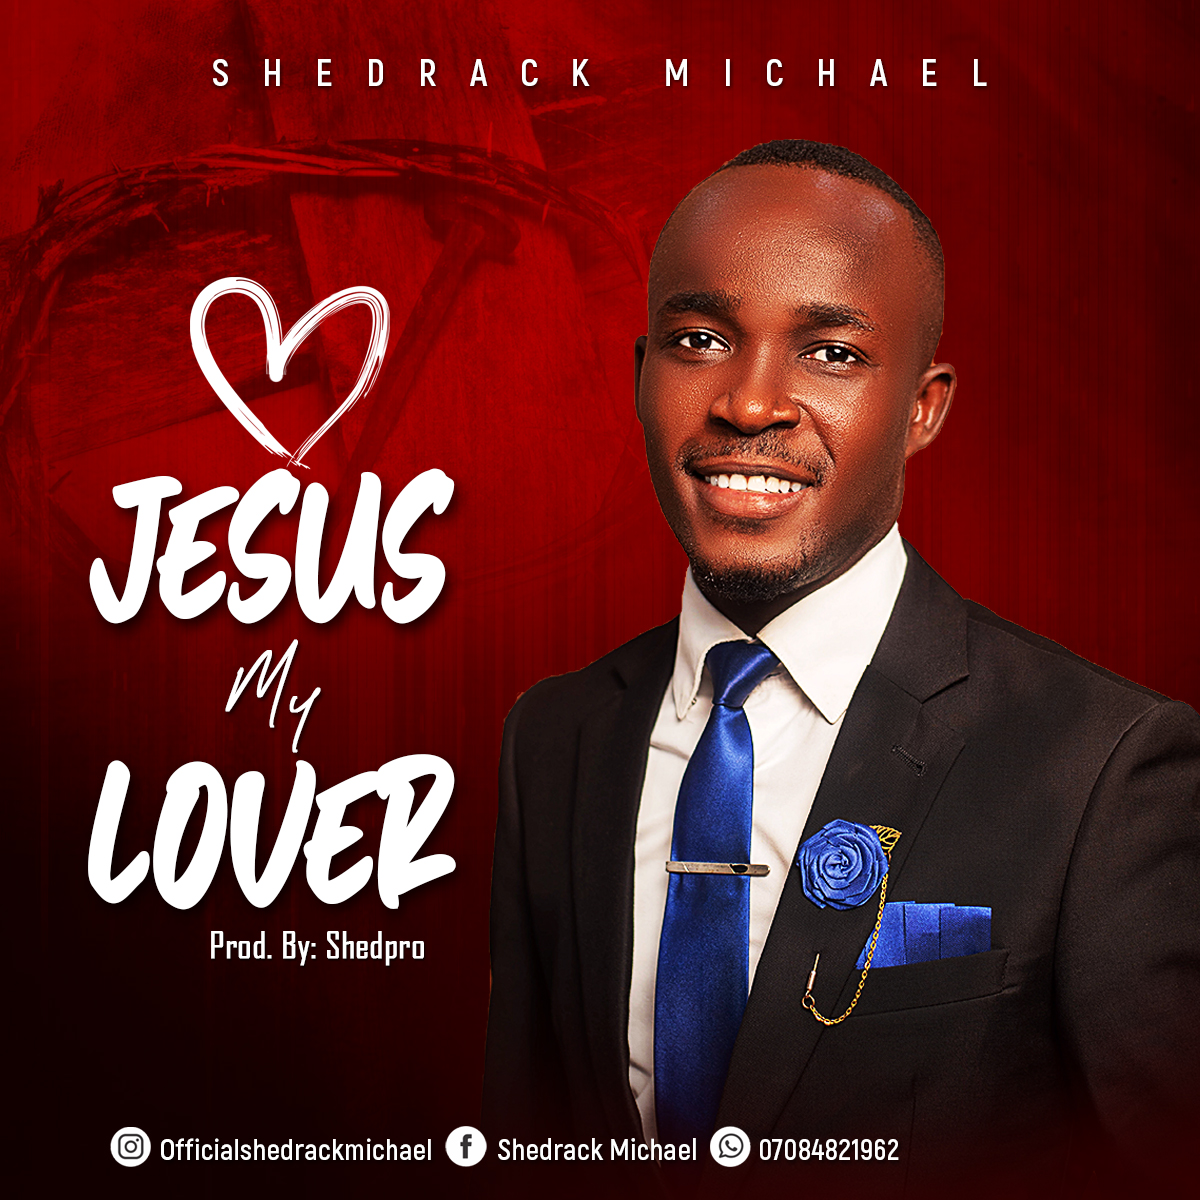 [Gospel music] Shedrack Michael - Jesus my lover (prod. By SheDoro) #hypebenue